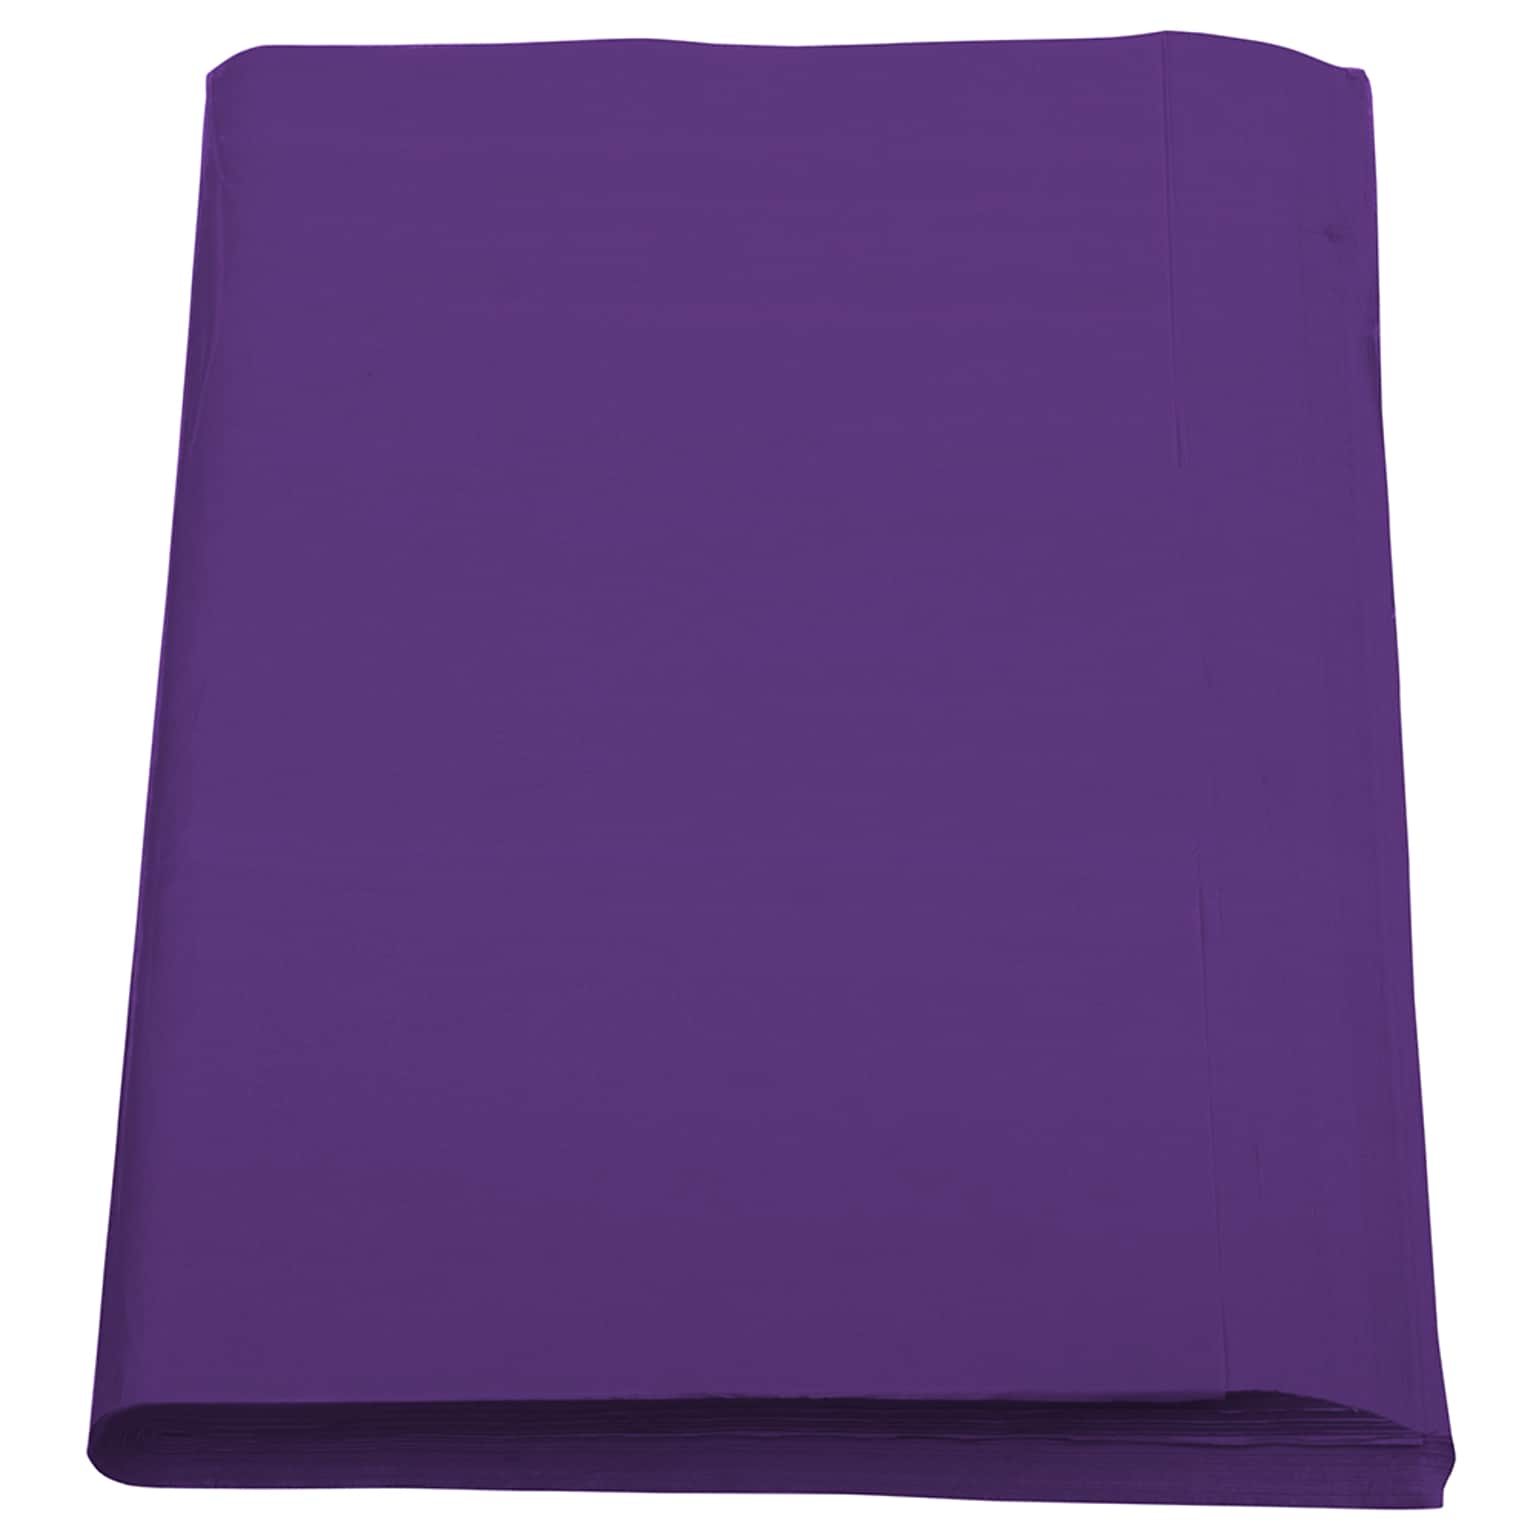 JAM PAPER Tissue Paper, Purple, 480 Sheets/Ream